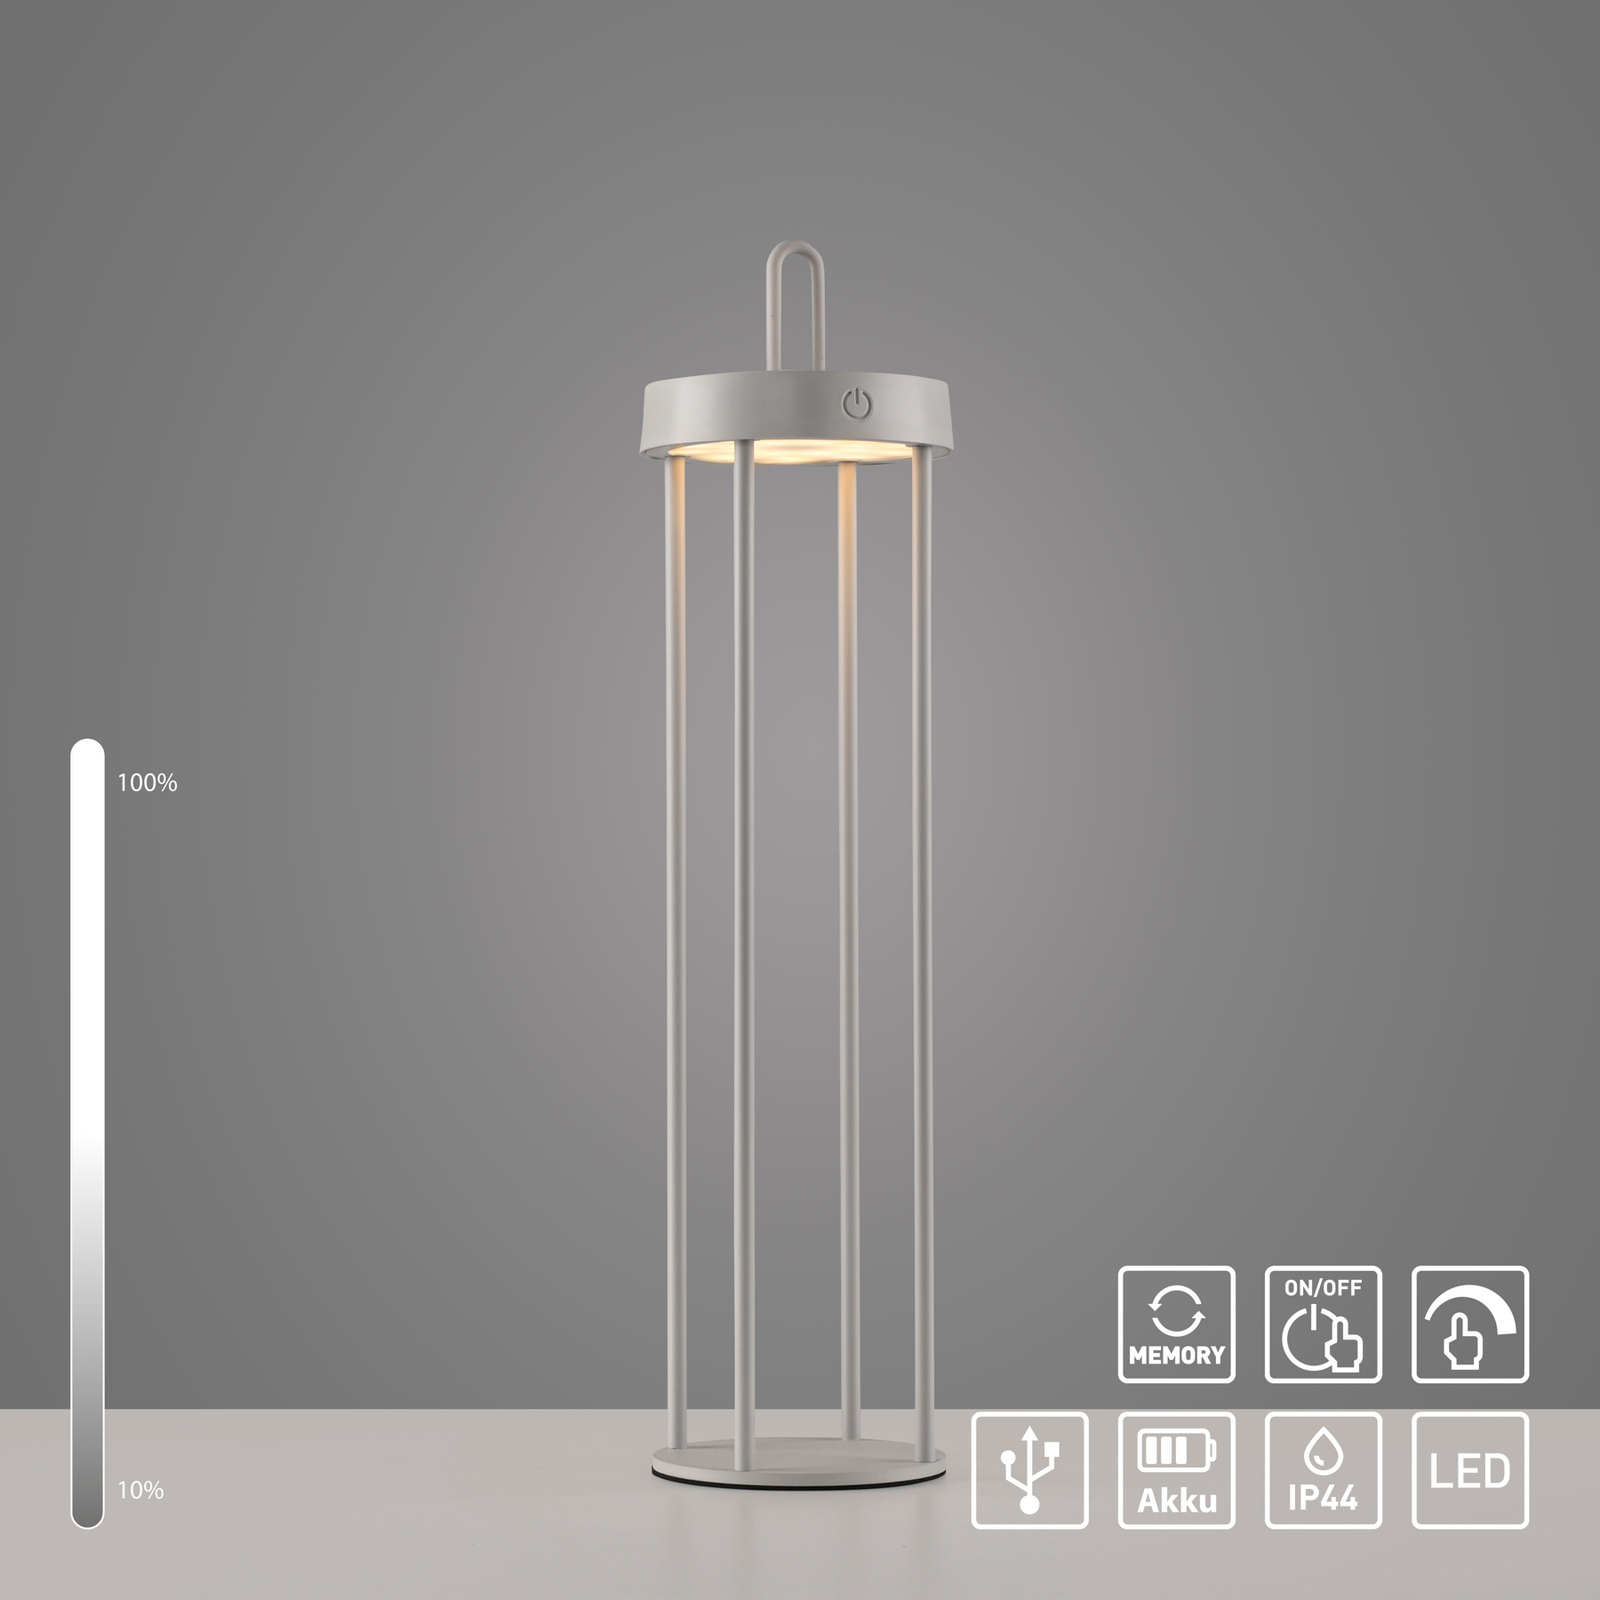 JUST LIGHT. LED-bordlampe Anselm grå-beige 50 cm jern